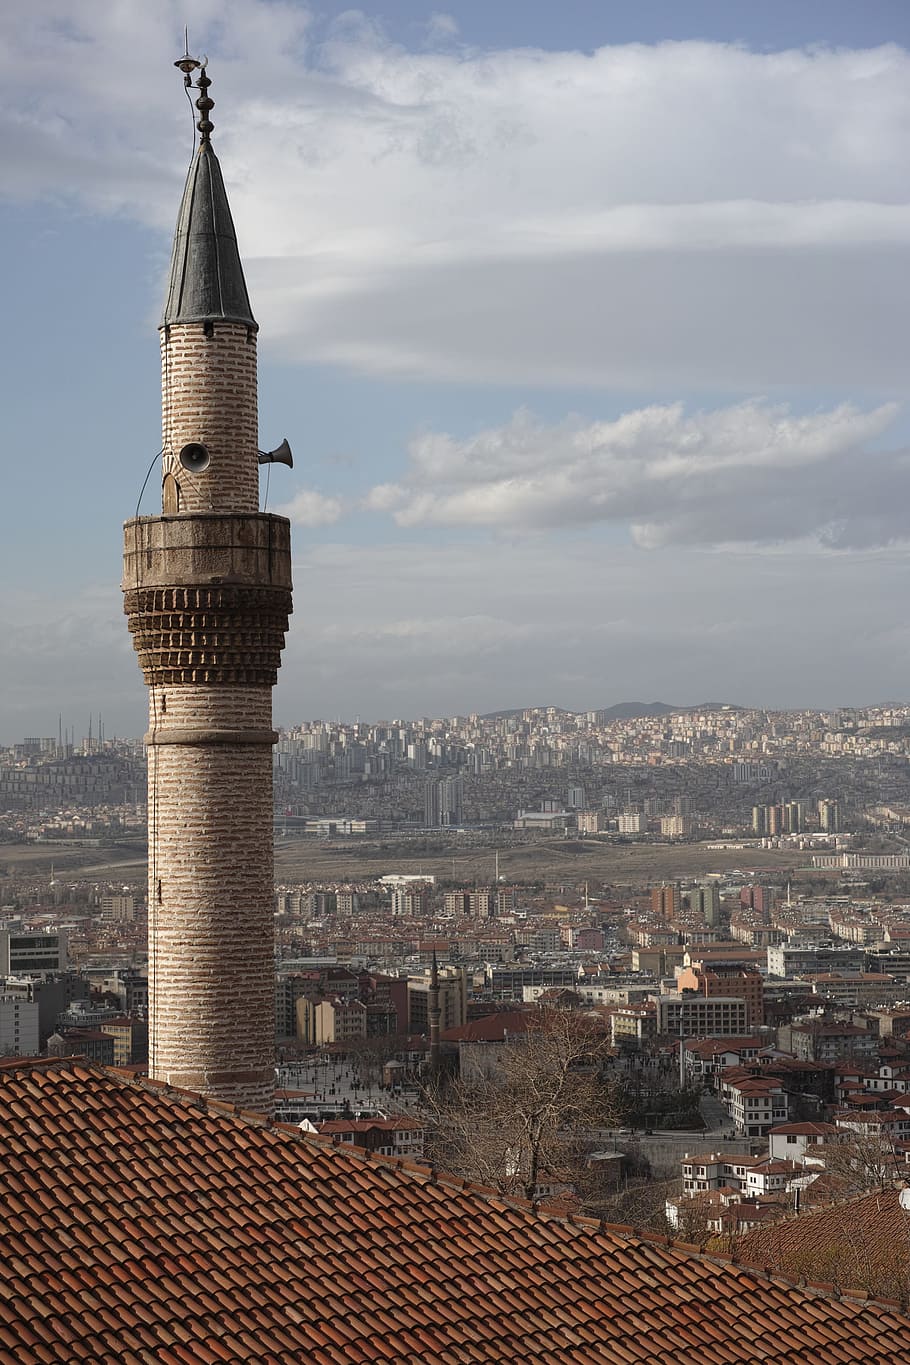 cami, minaret, anatolia, ankara, turkey, travel, sky, dome, landscape, prayer